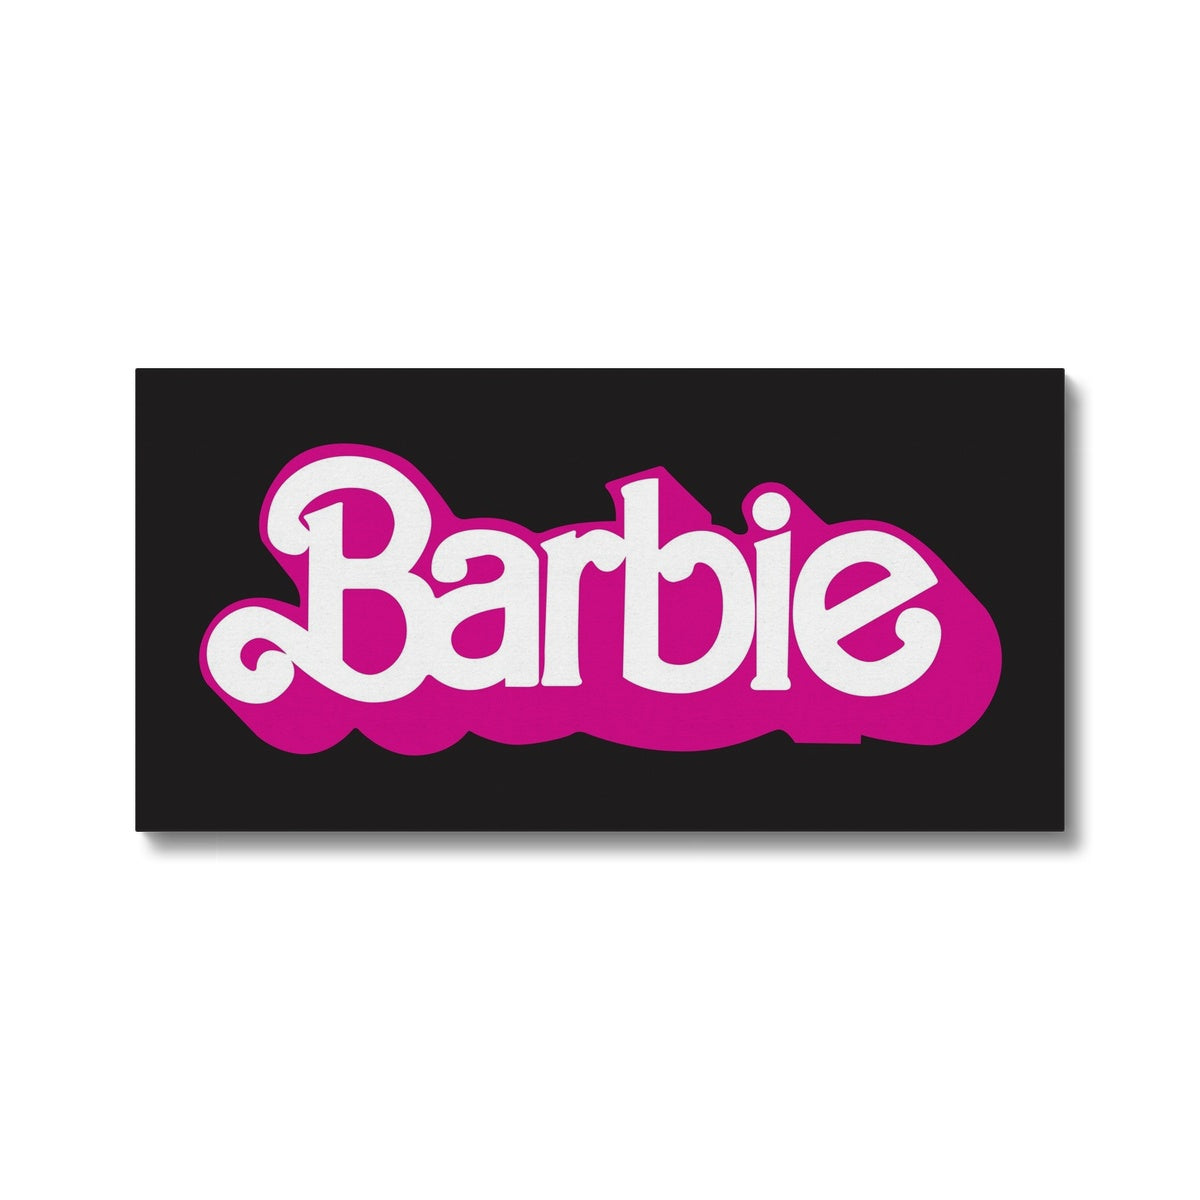 Black & Pink Barbie Painting Canvas